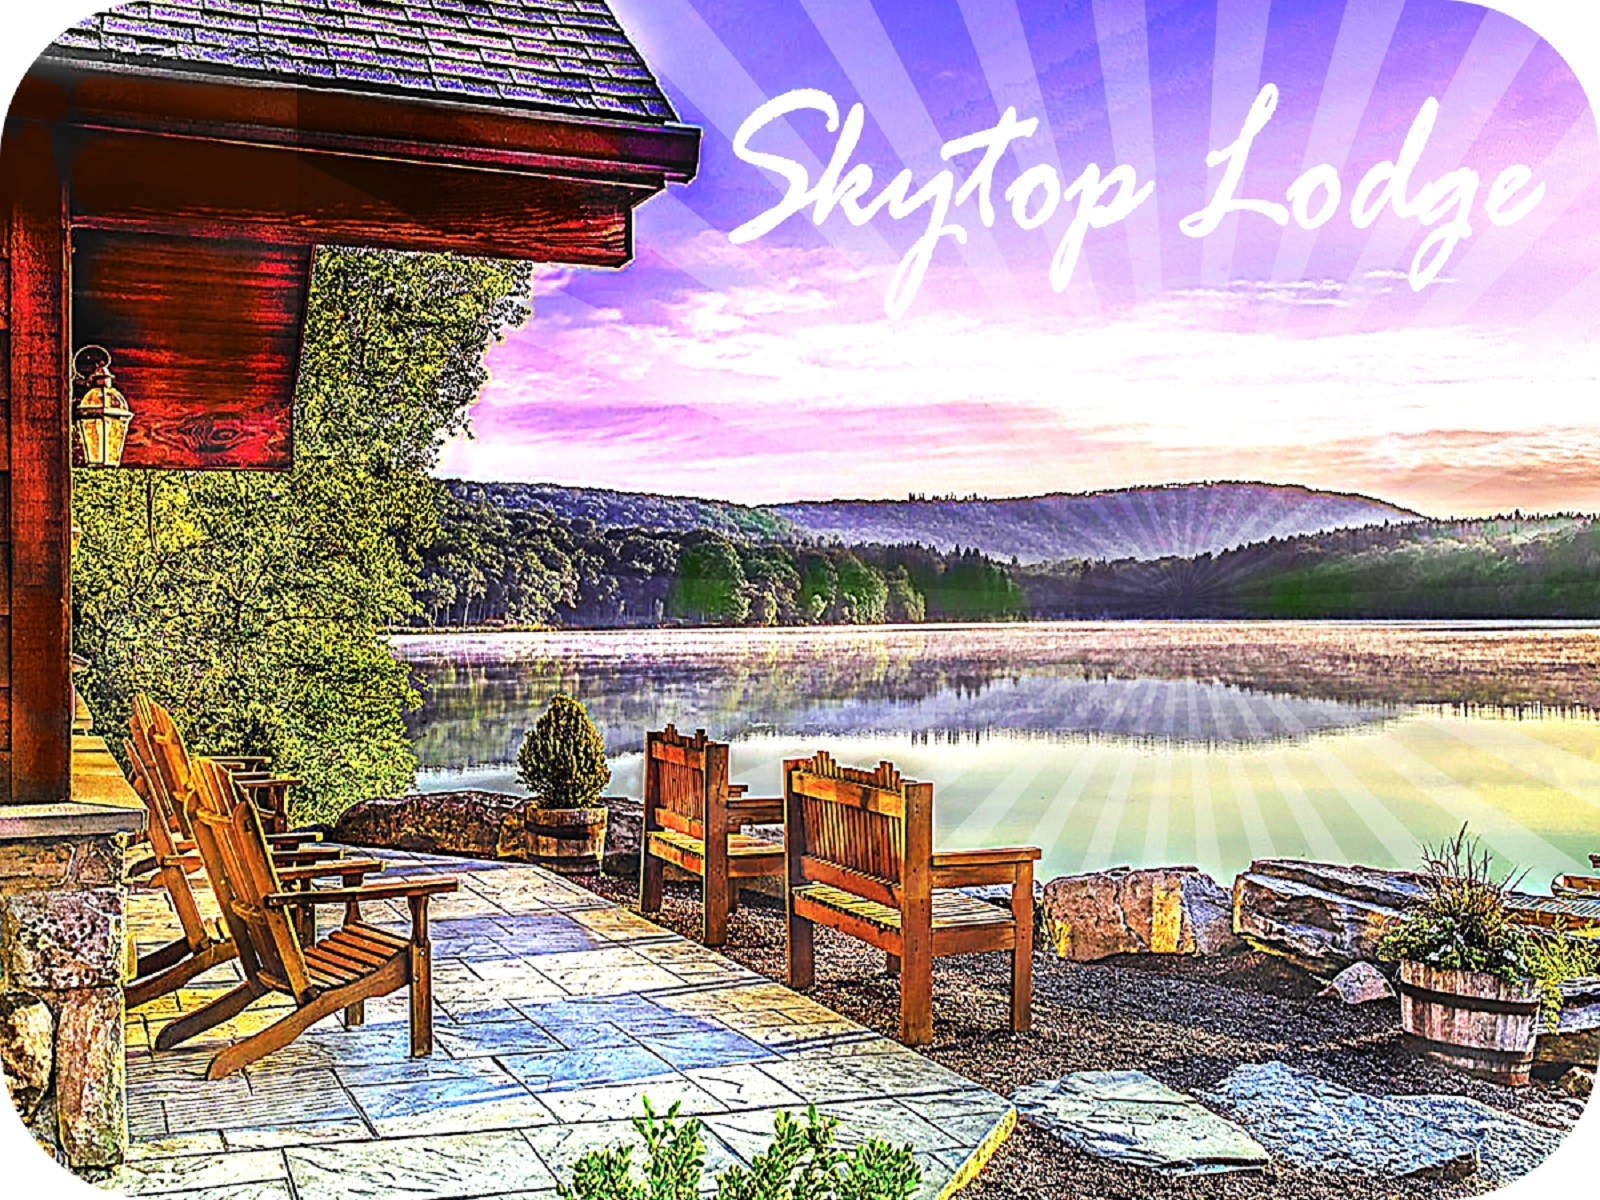 Skytop Lodge Pennsylvania with Sunset Photo Fridge Magnet - $7.25